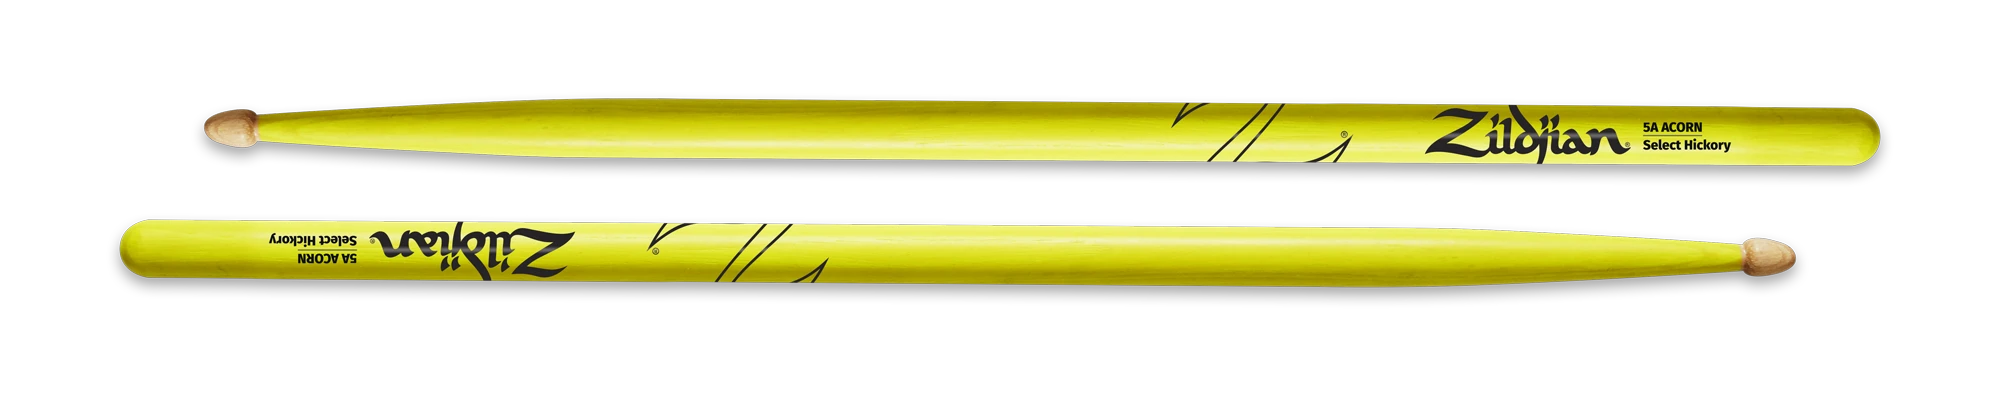 Zildjian Sticks Holzkopf 5A Neon Gelb Acorn T